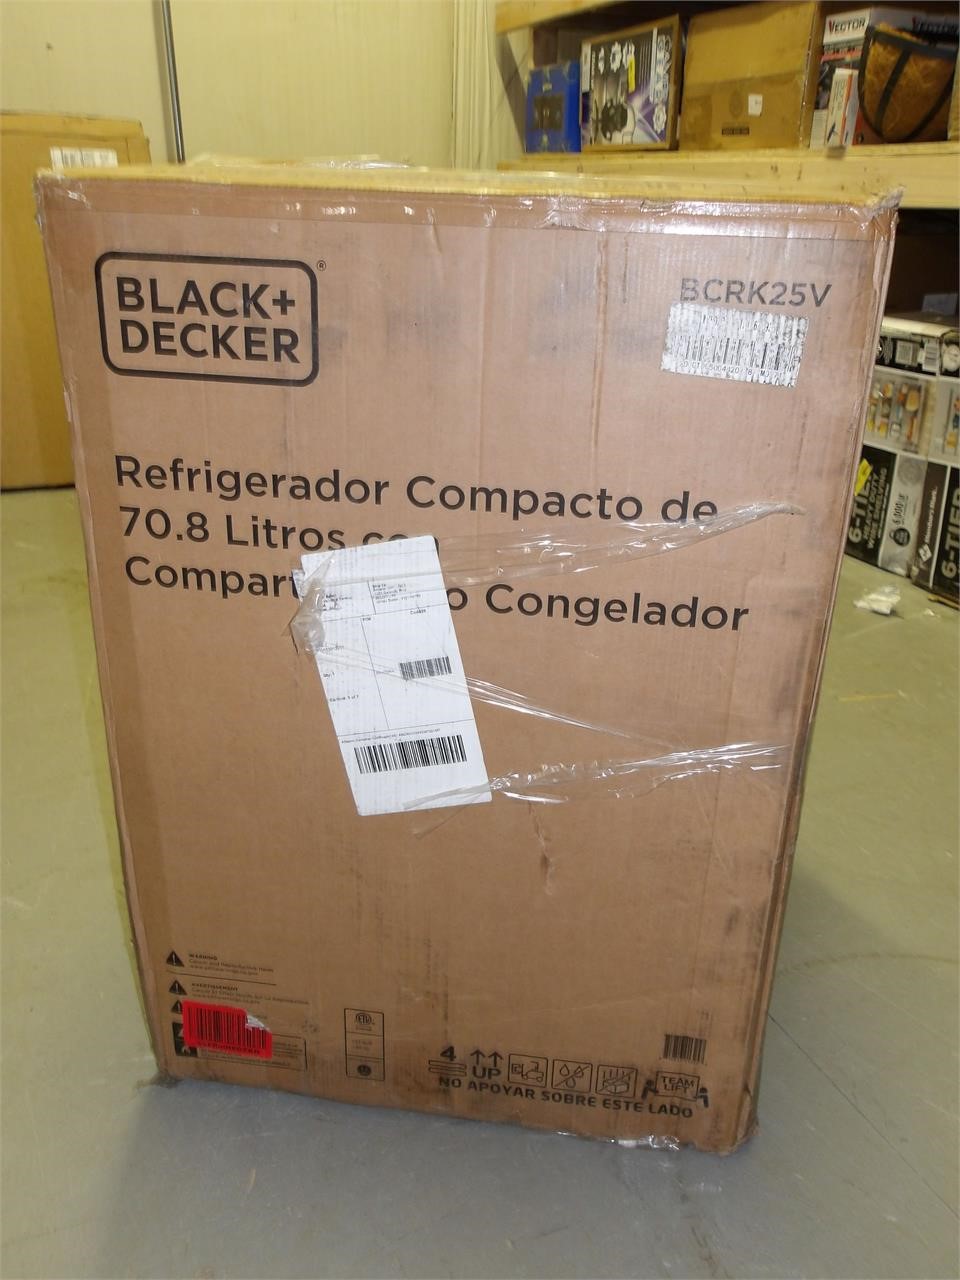 Black and Decker 2.5 Cu Ft Compact Fridge